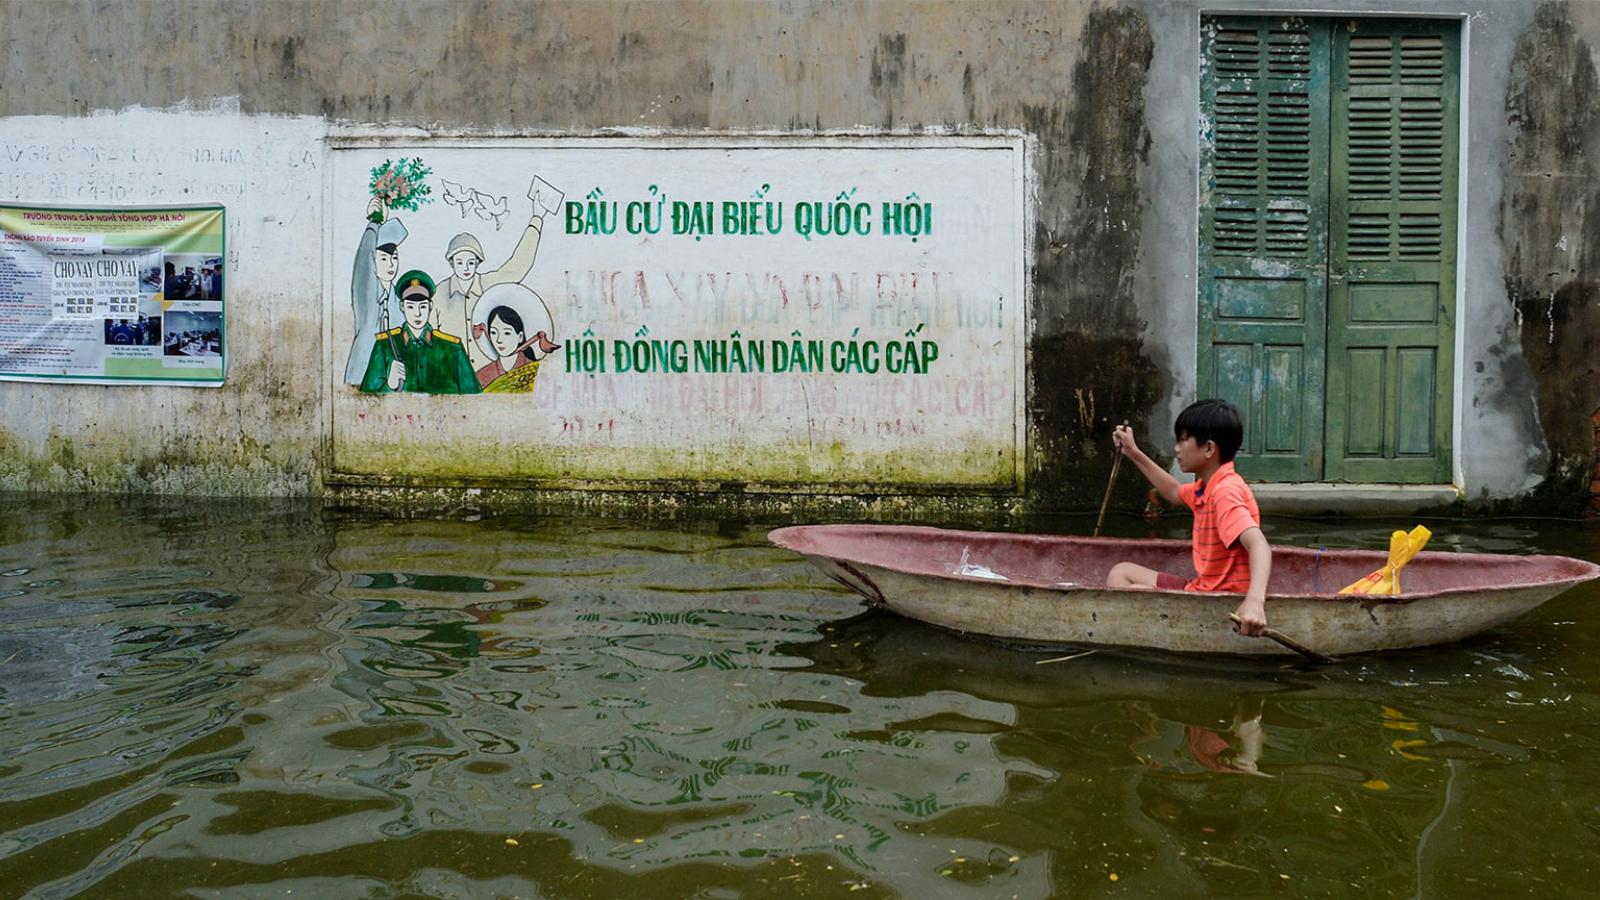 A small boy in a canoe on a flooded street